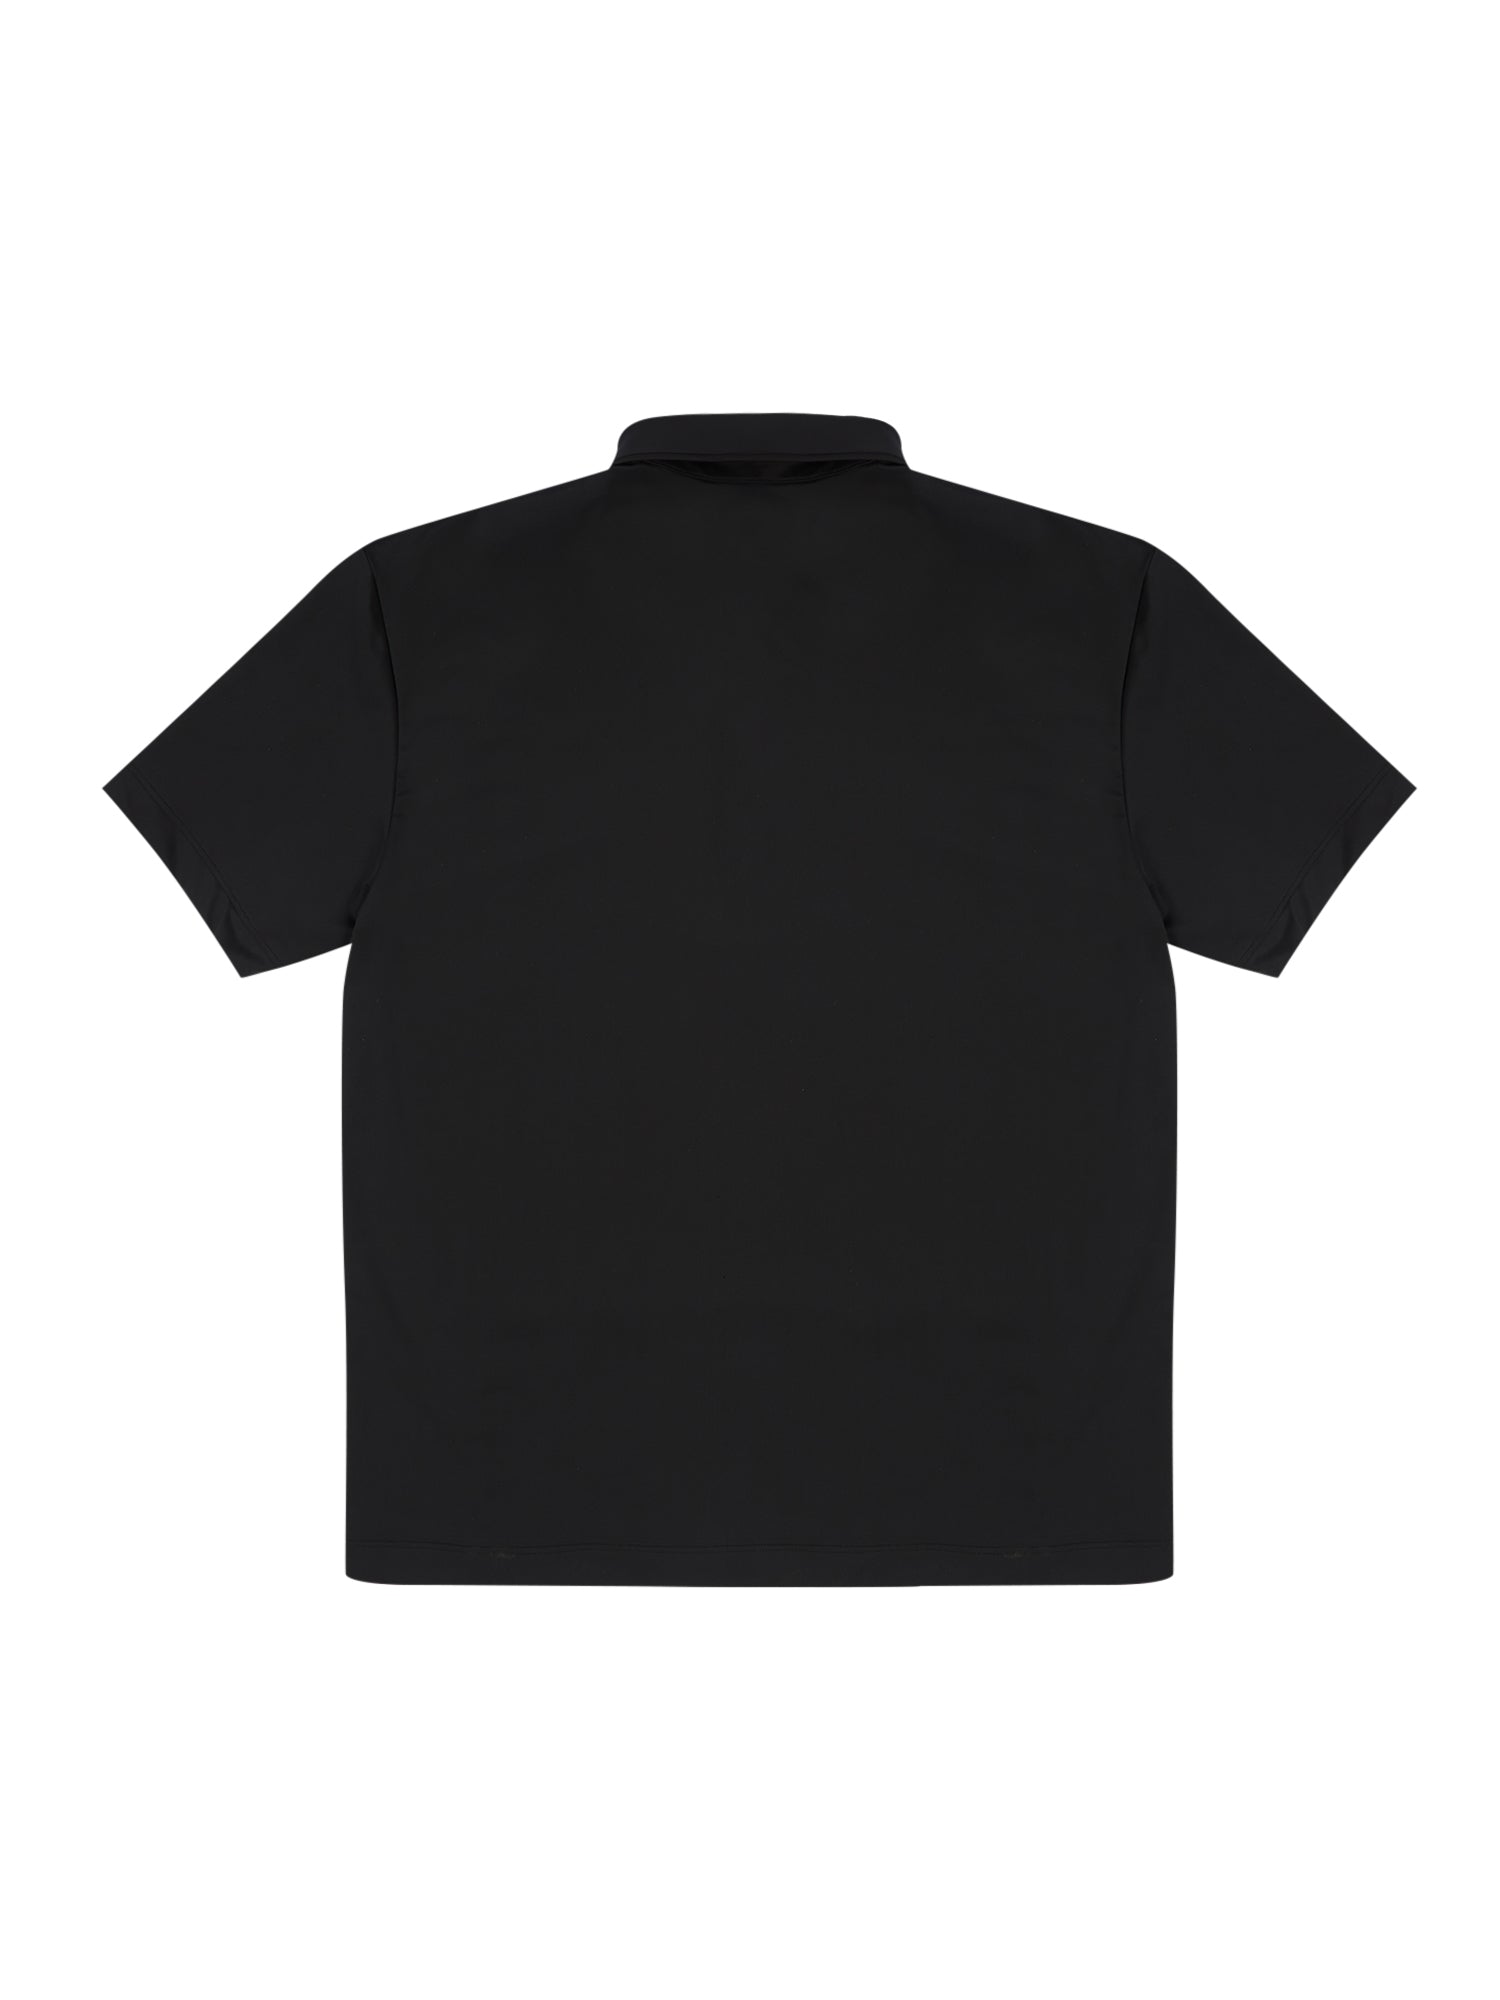 Black econly polo t-shirt